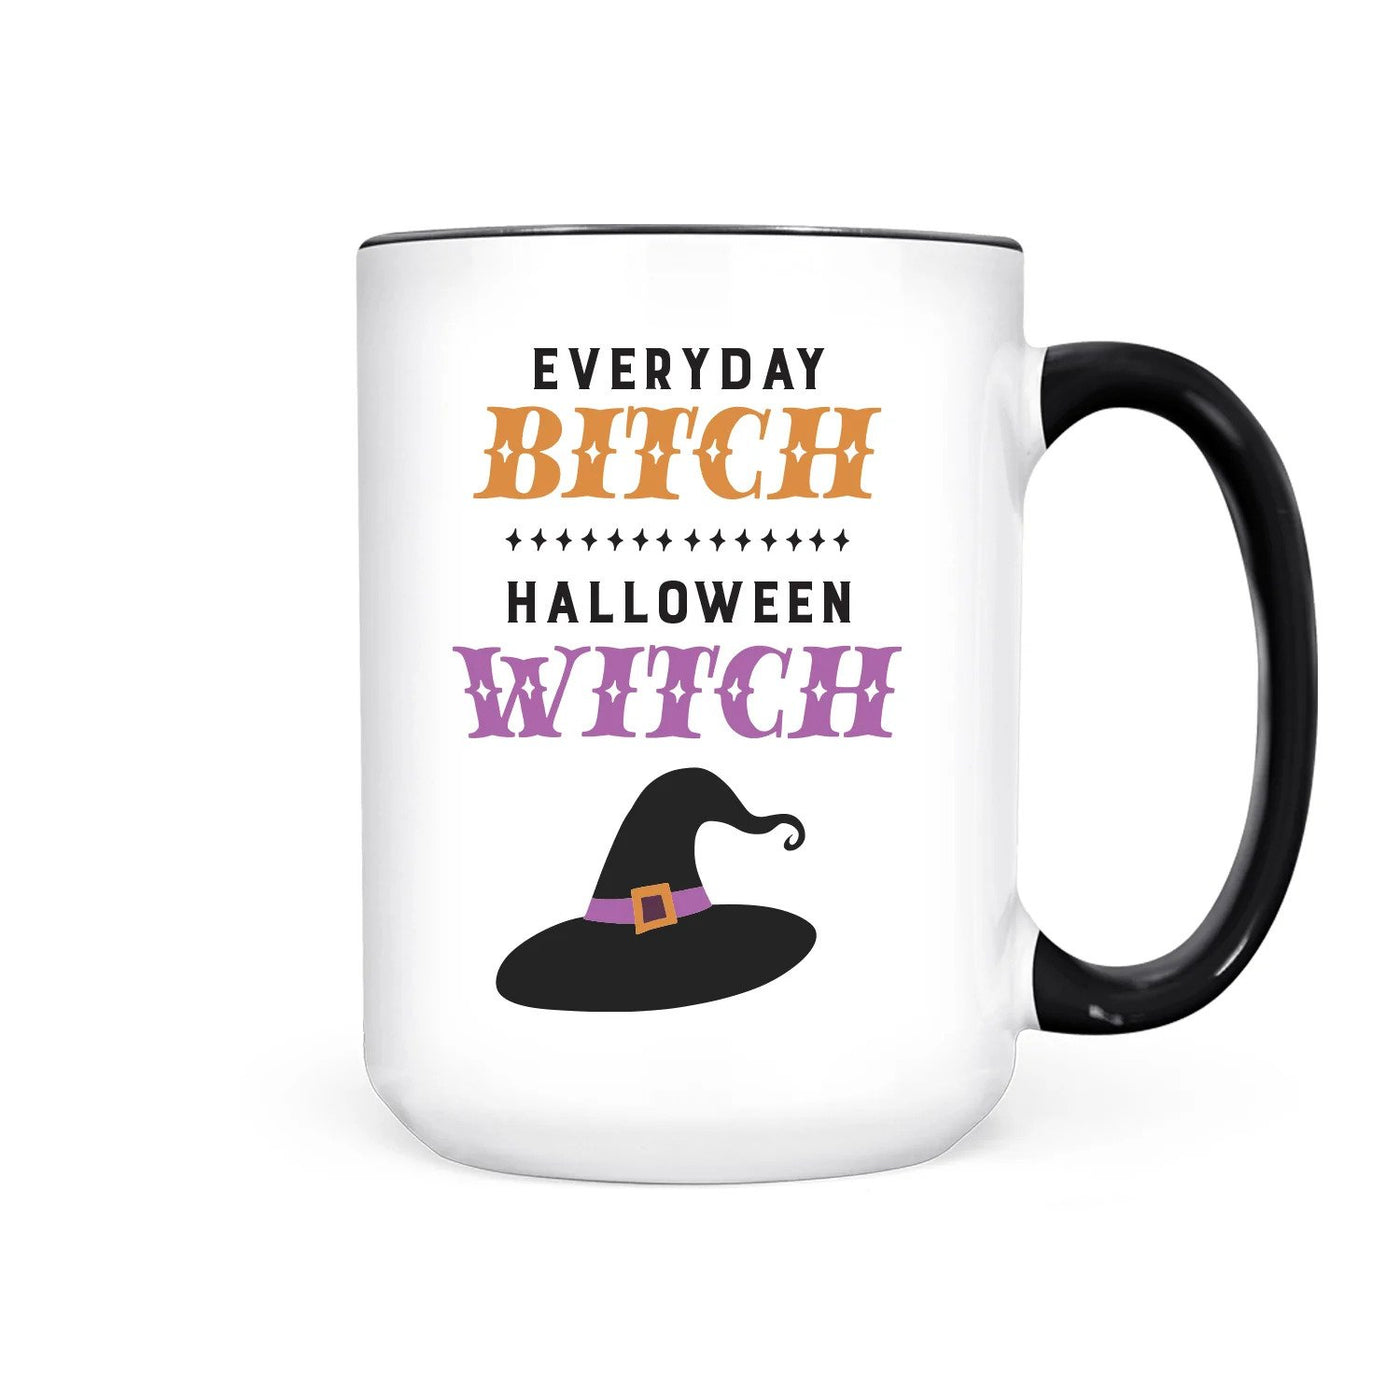 Everyday Bitch, Halloween Witch Mug